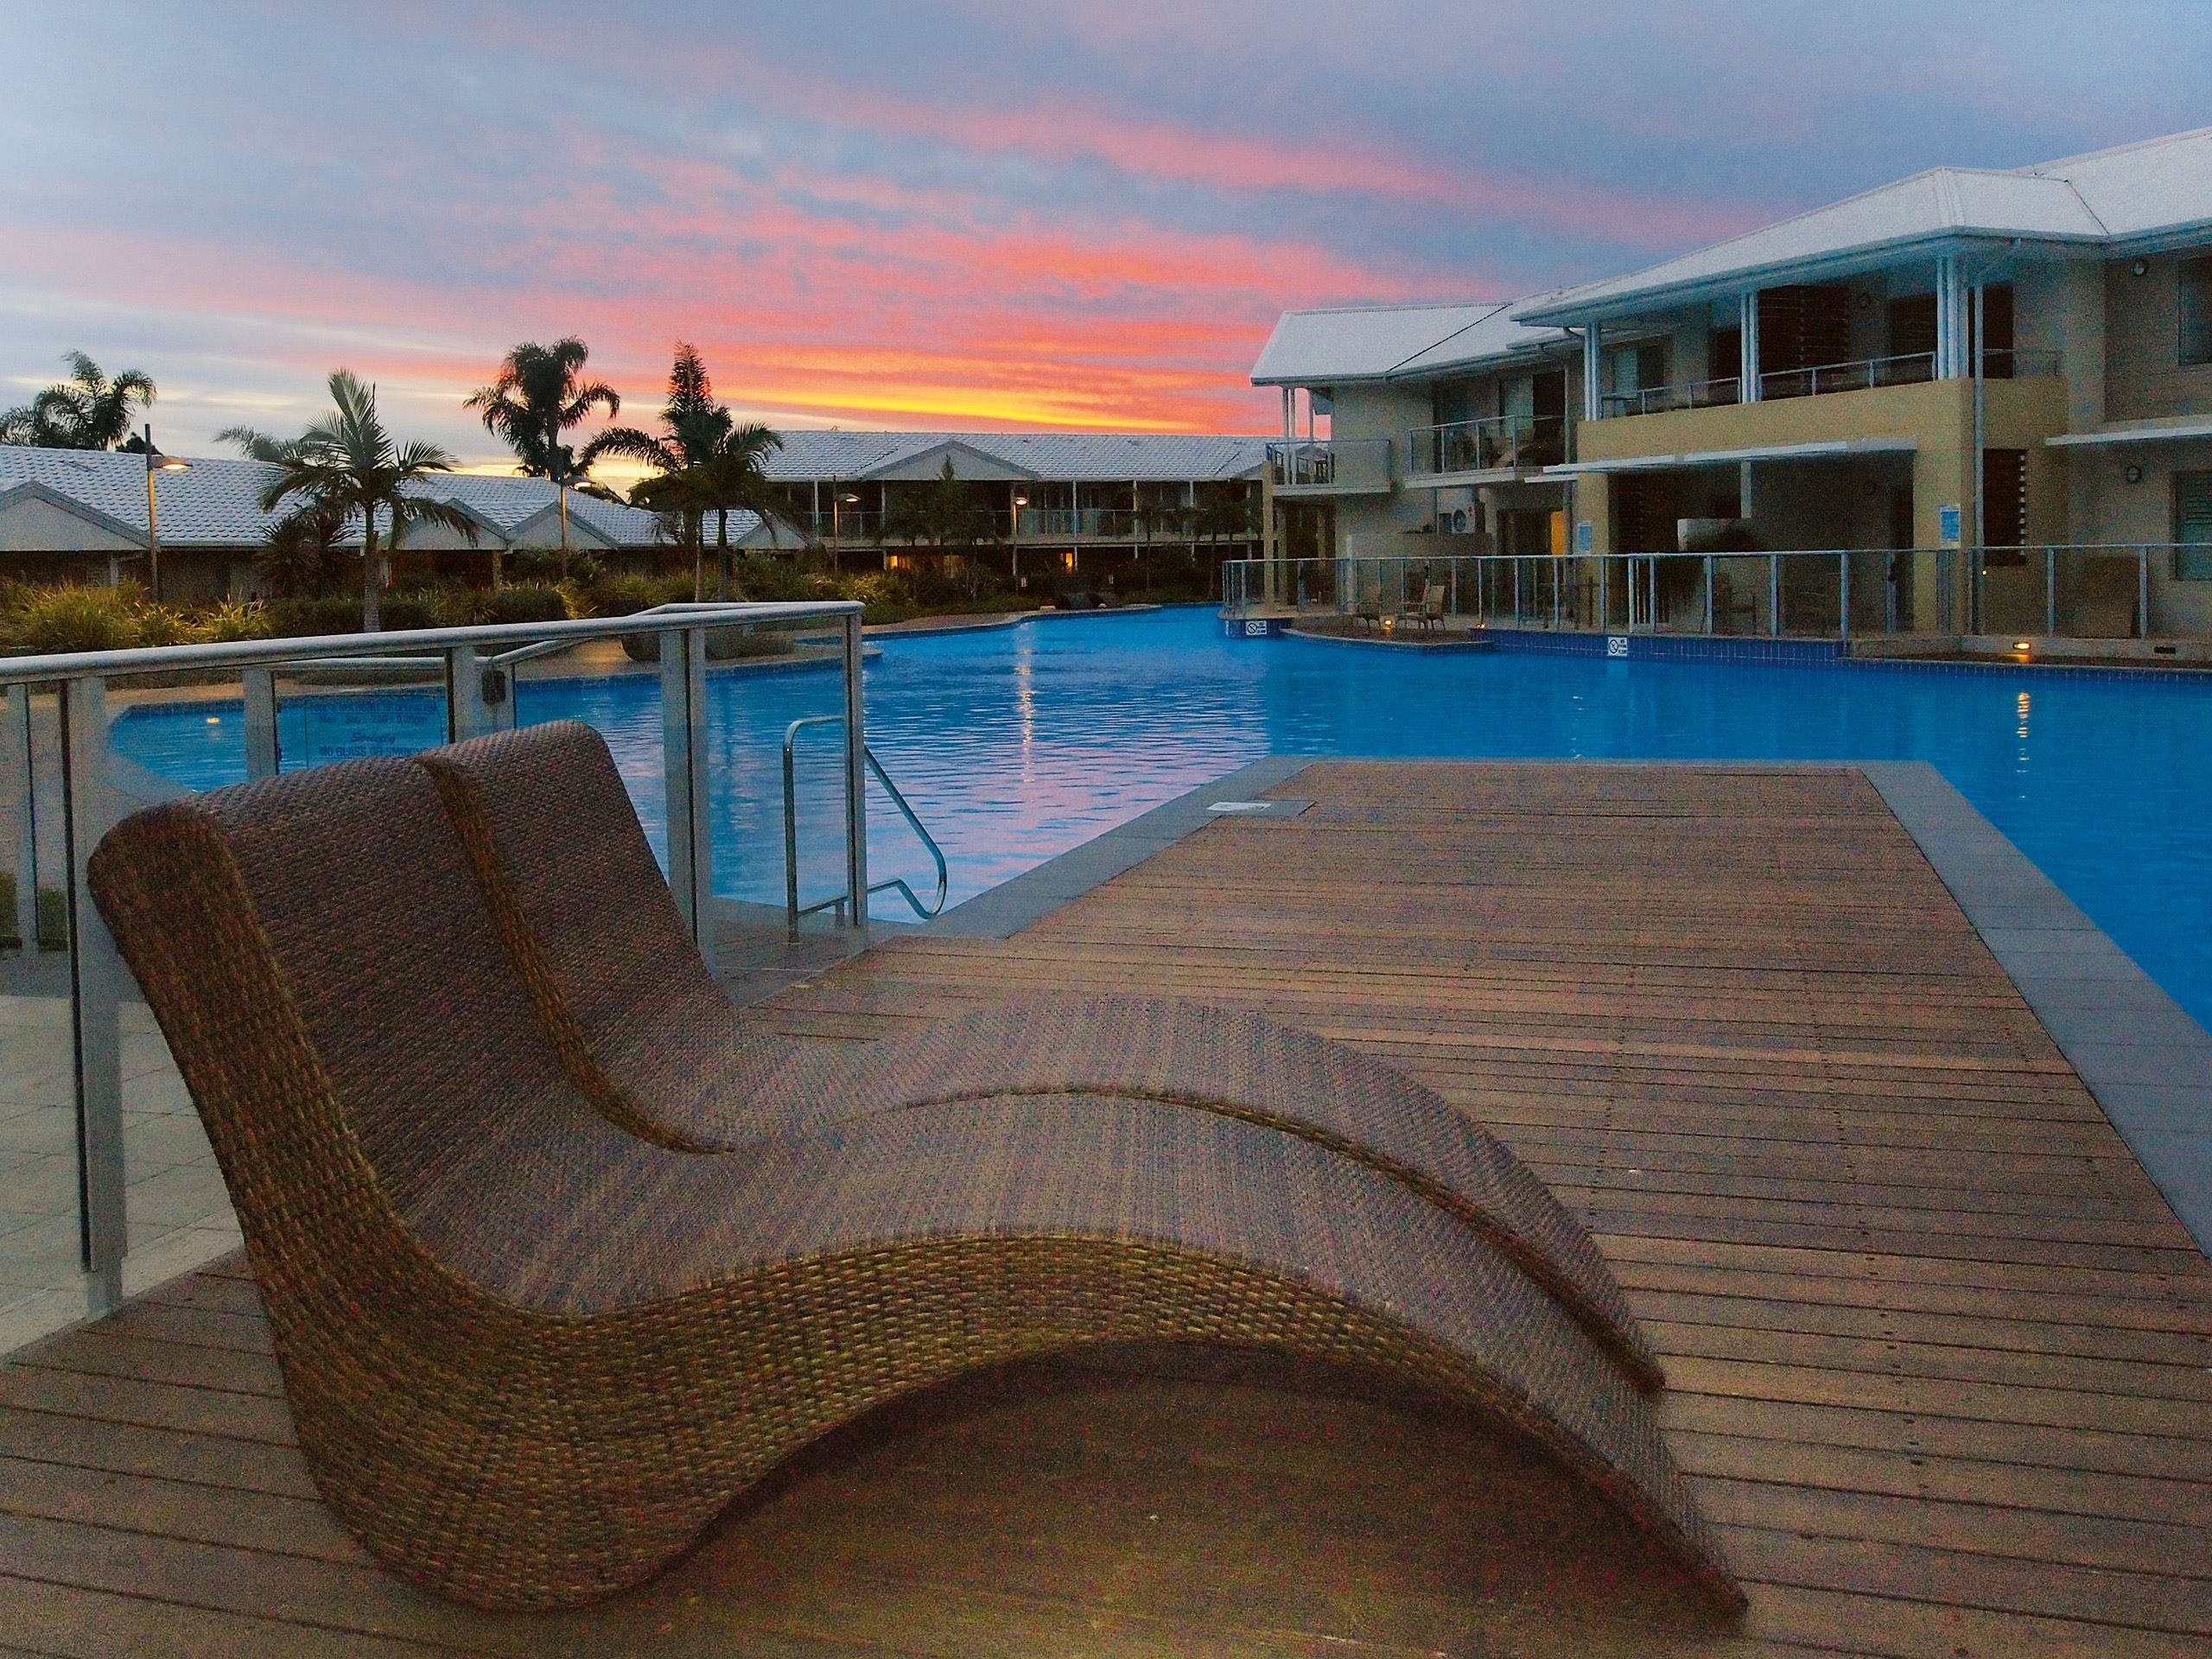 Oaks Port Stephens Pacific Blue Resort - Lennox Head Accommodation